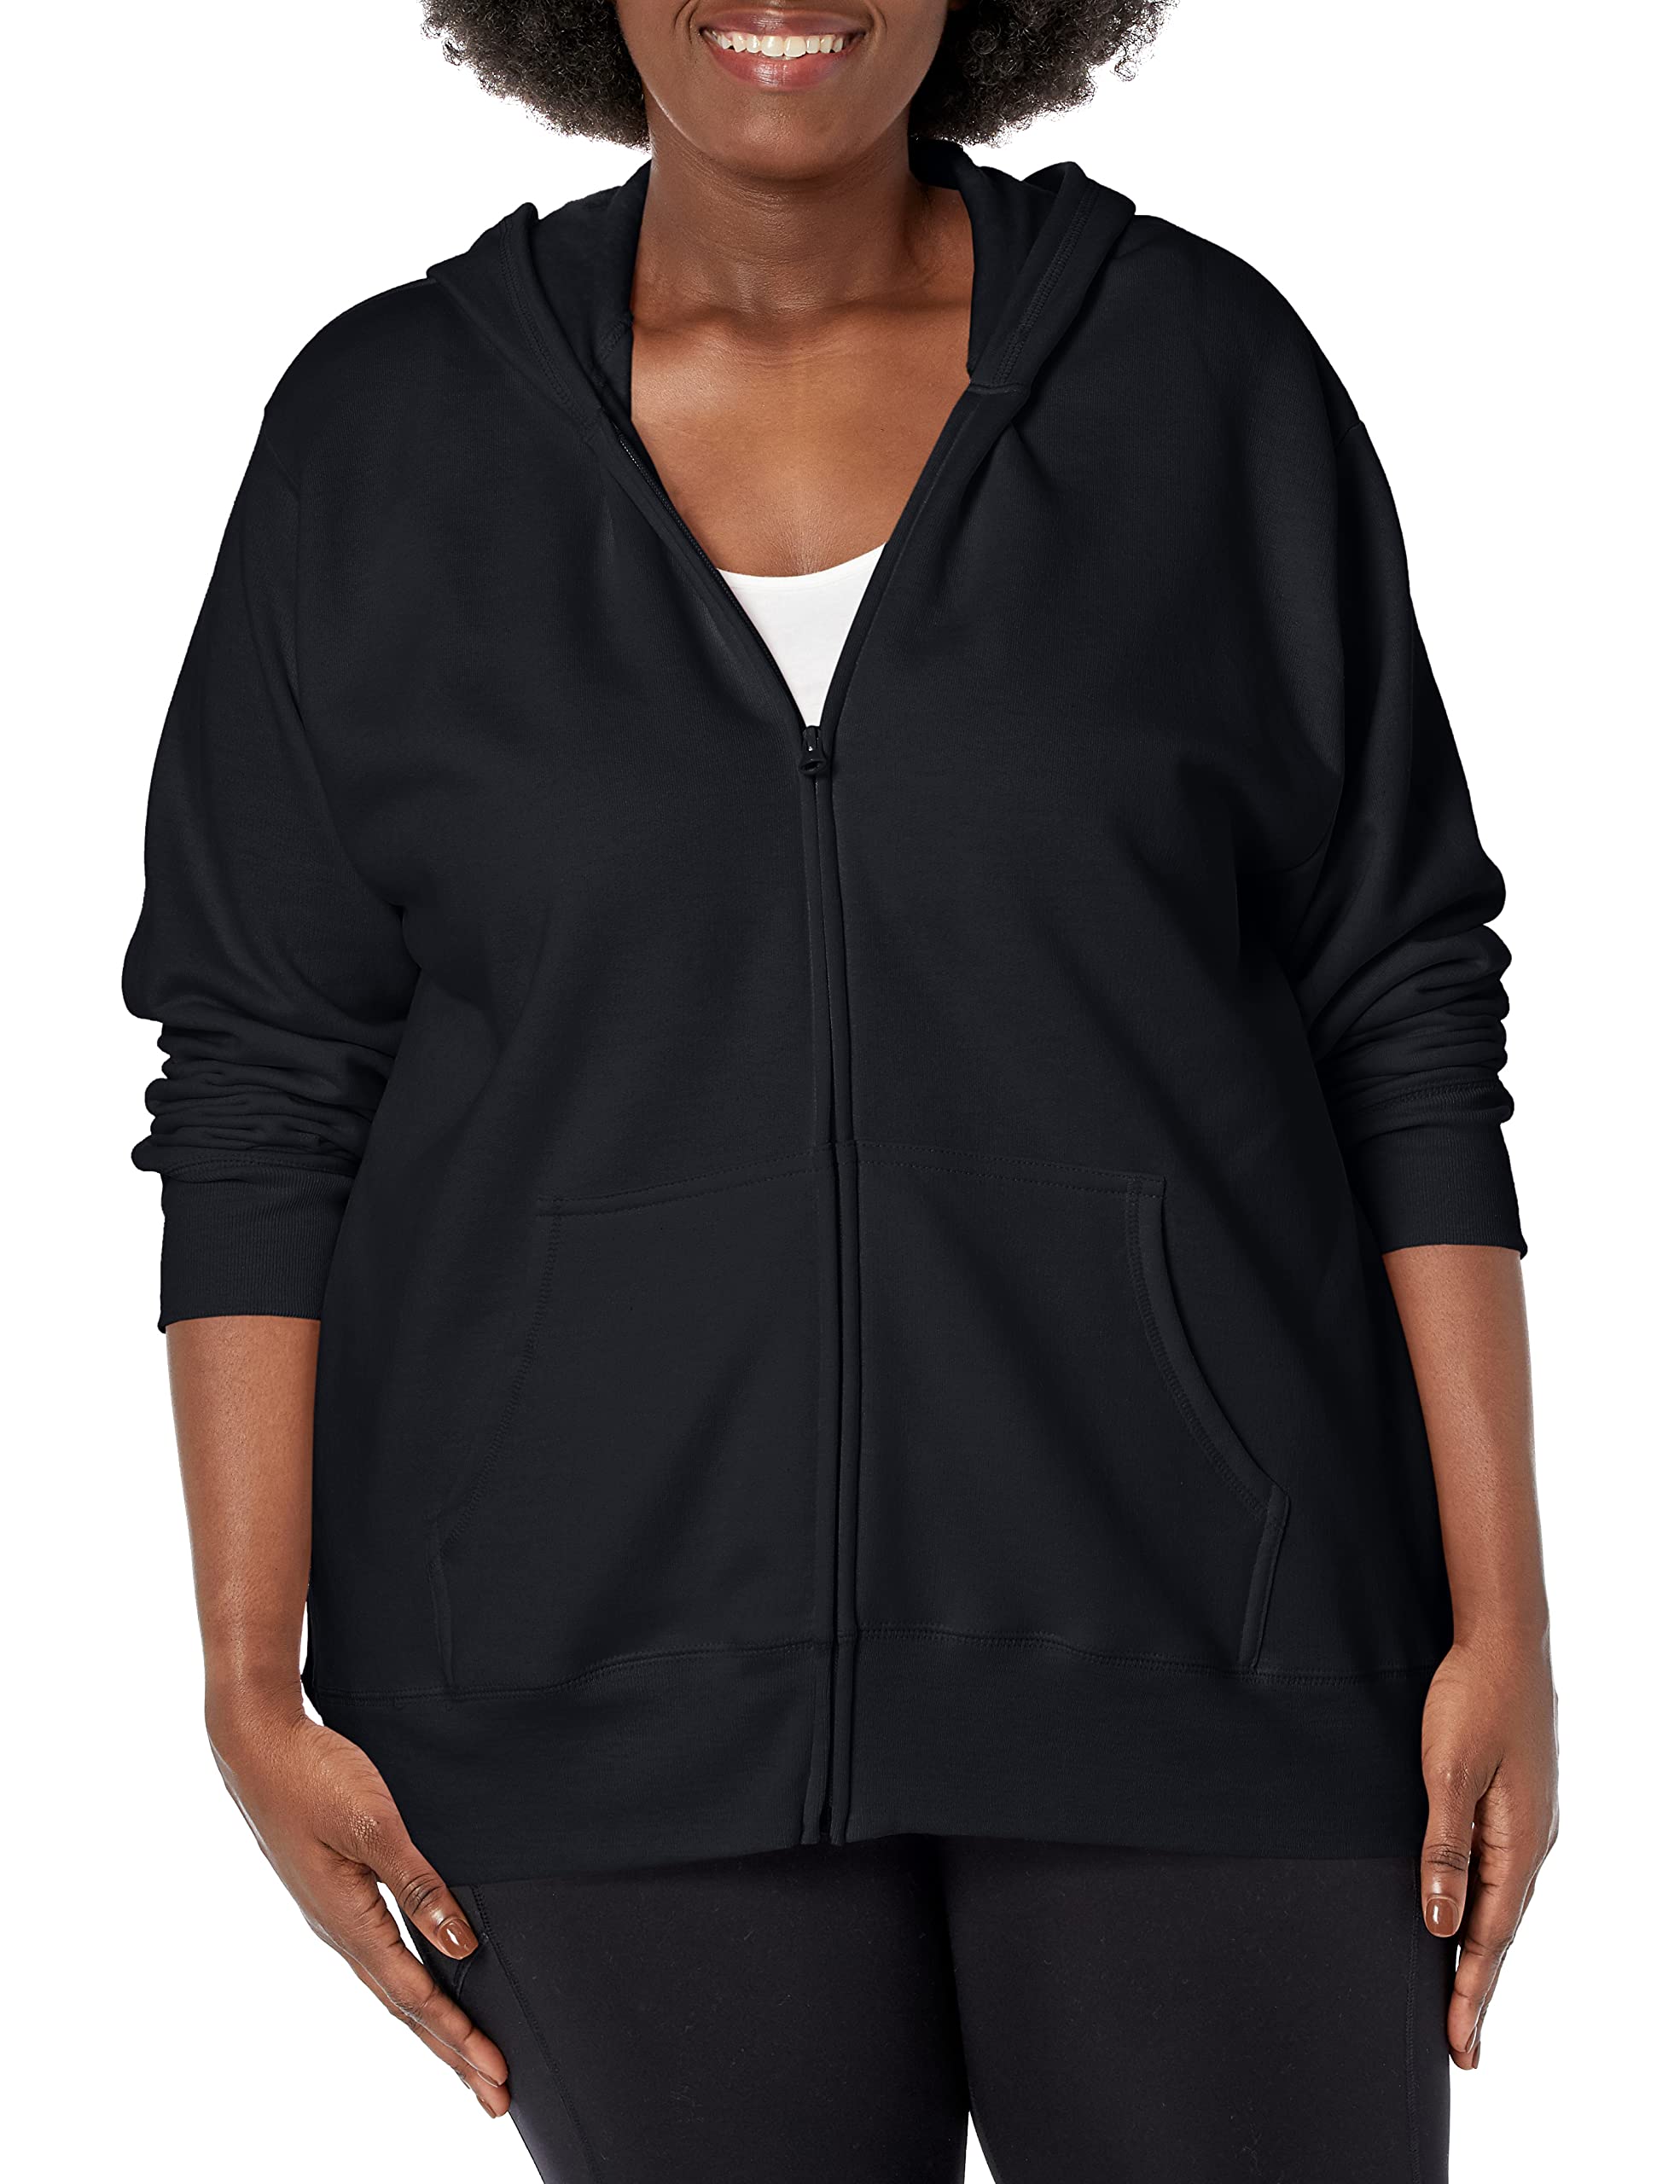 JUST MY SIZE Plus Size ComfortSoft EcoSmart Fleece Full-Zip Women's Hoodie